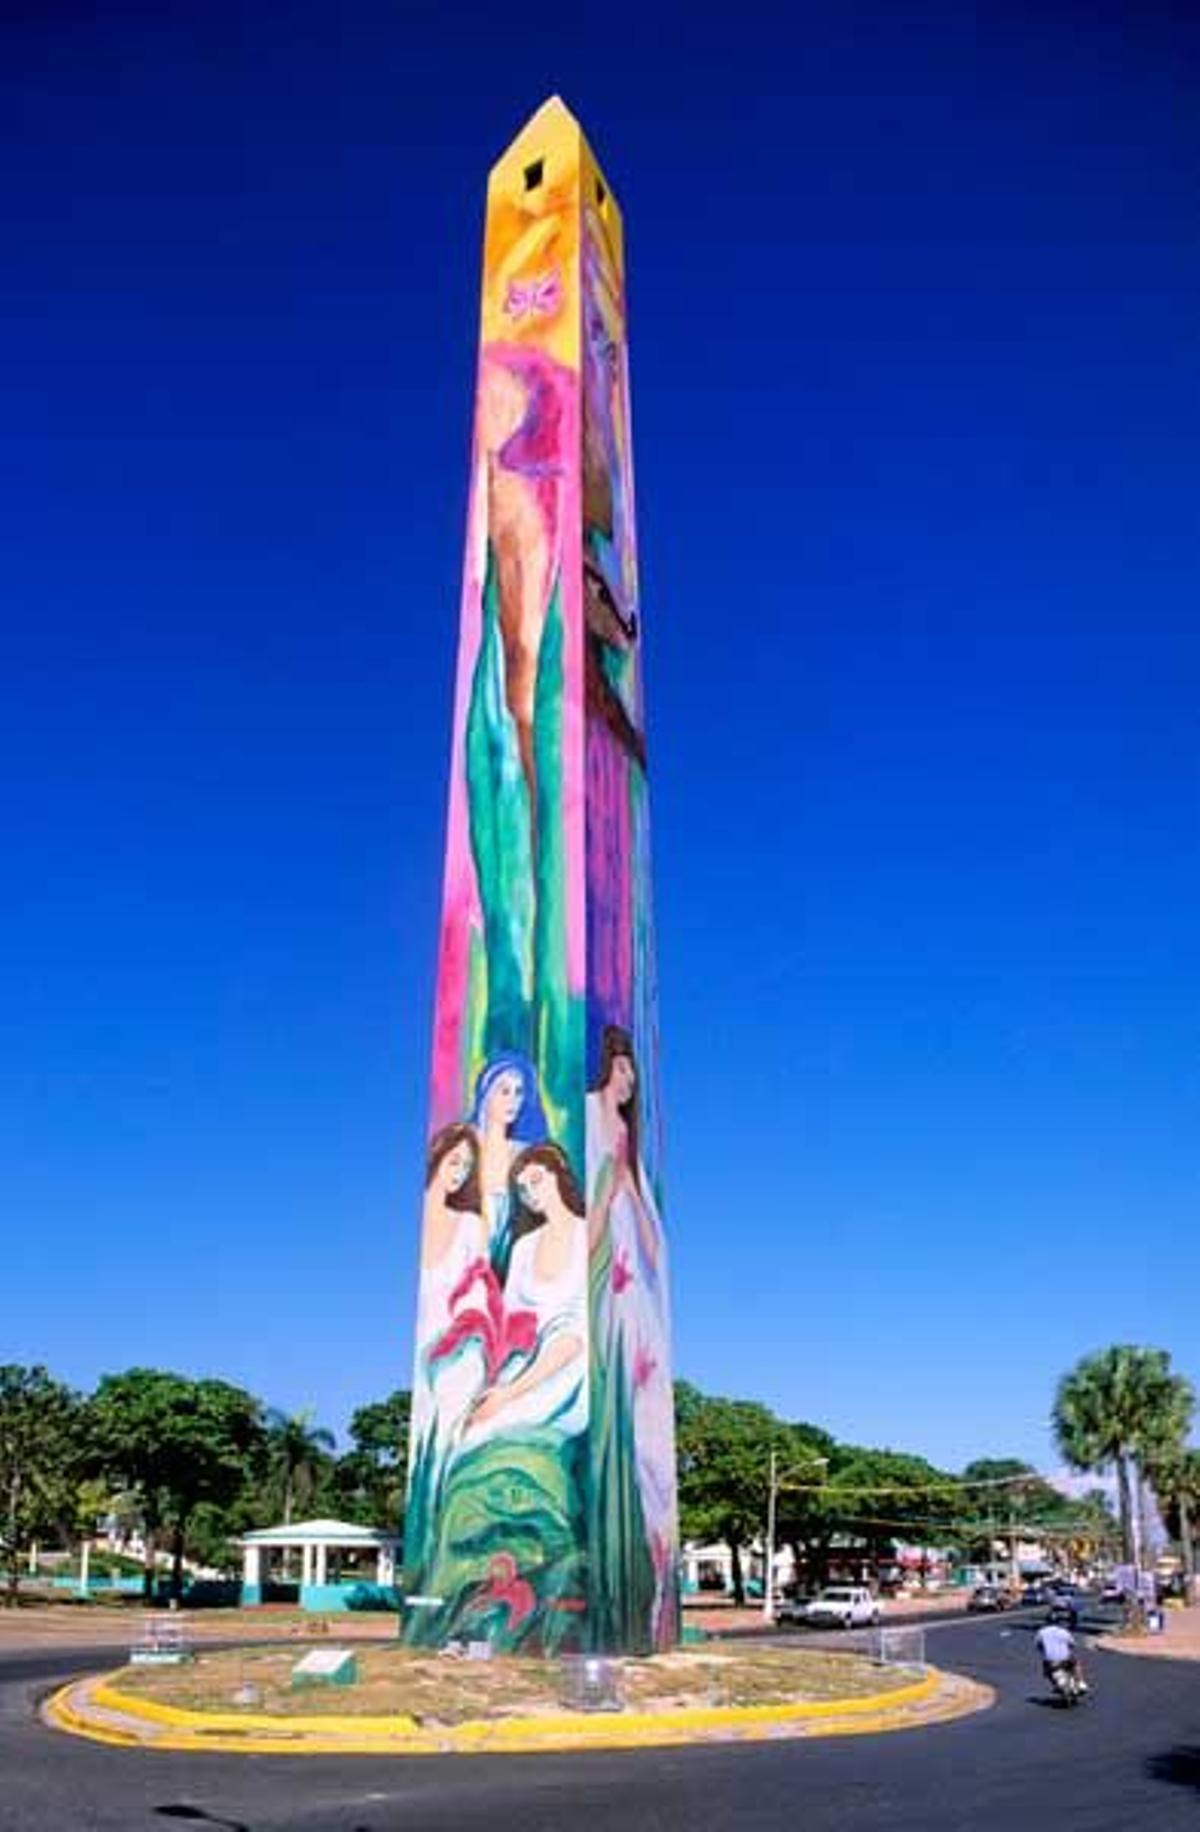 Obelisco Macho u Obelisco del malecón